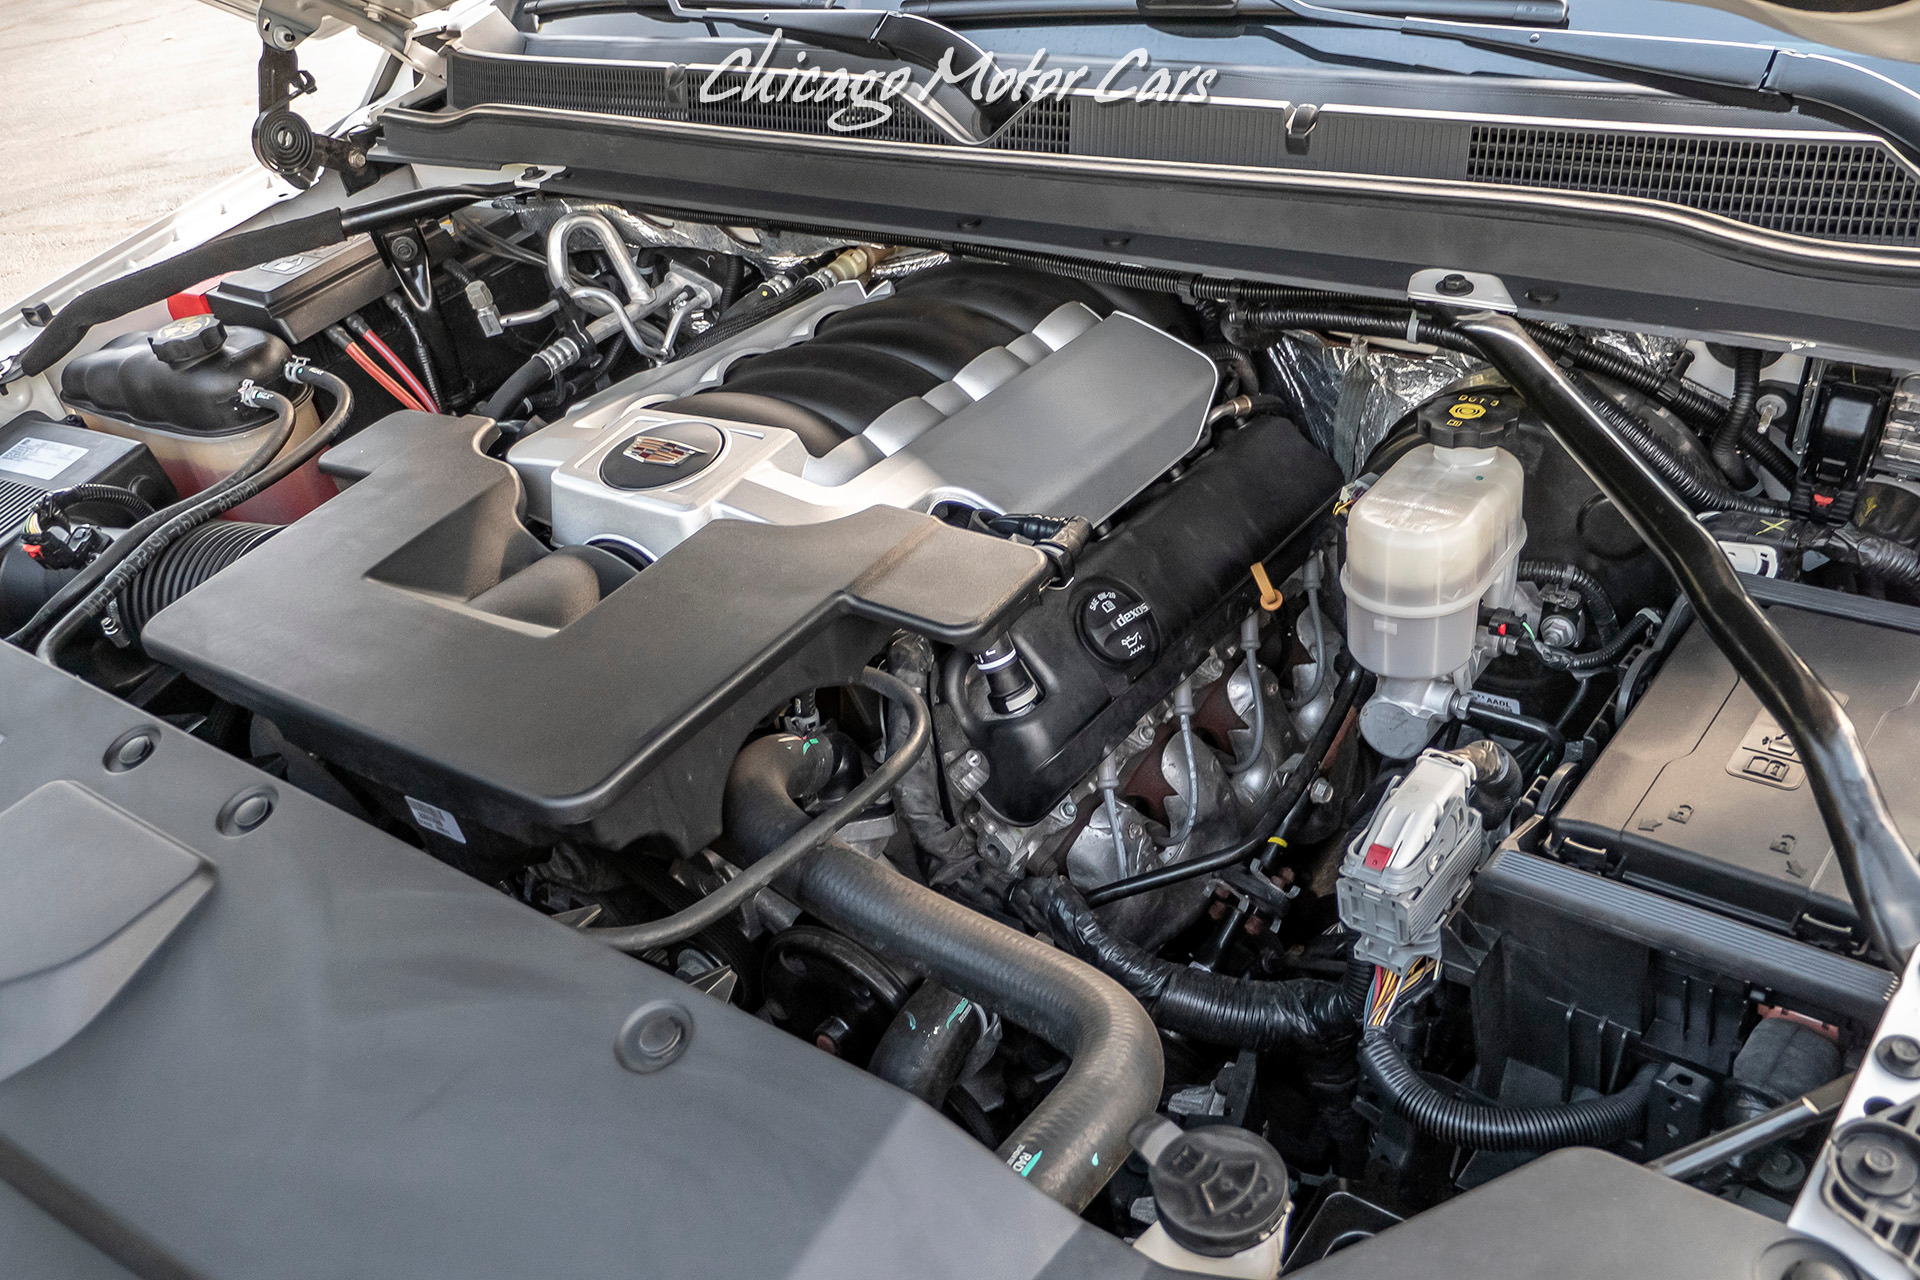 Used-2018-Cadillac-Escalade-ESV-4WD-Platinum-SUV-MSRP-102K-LOADED-REAR-SEAT-ENTERTAINMENT